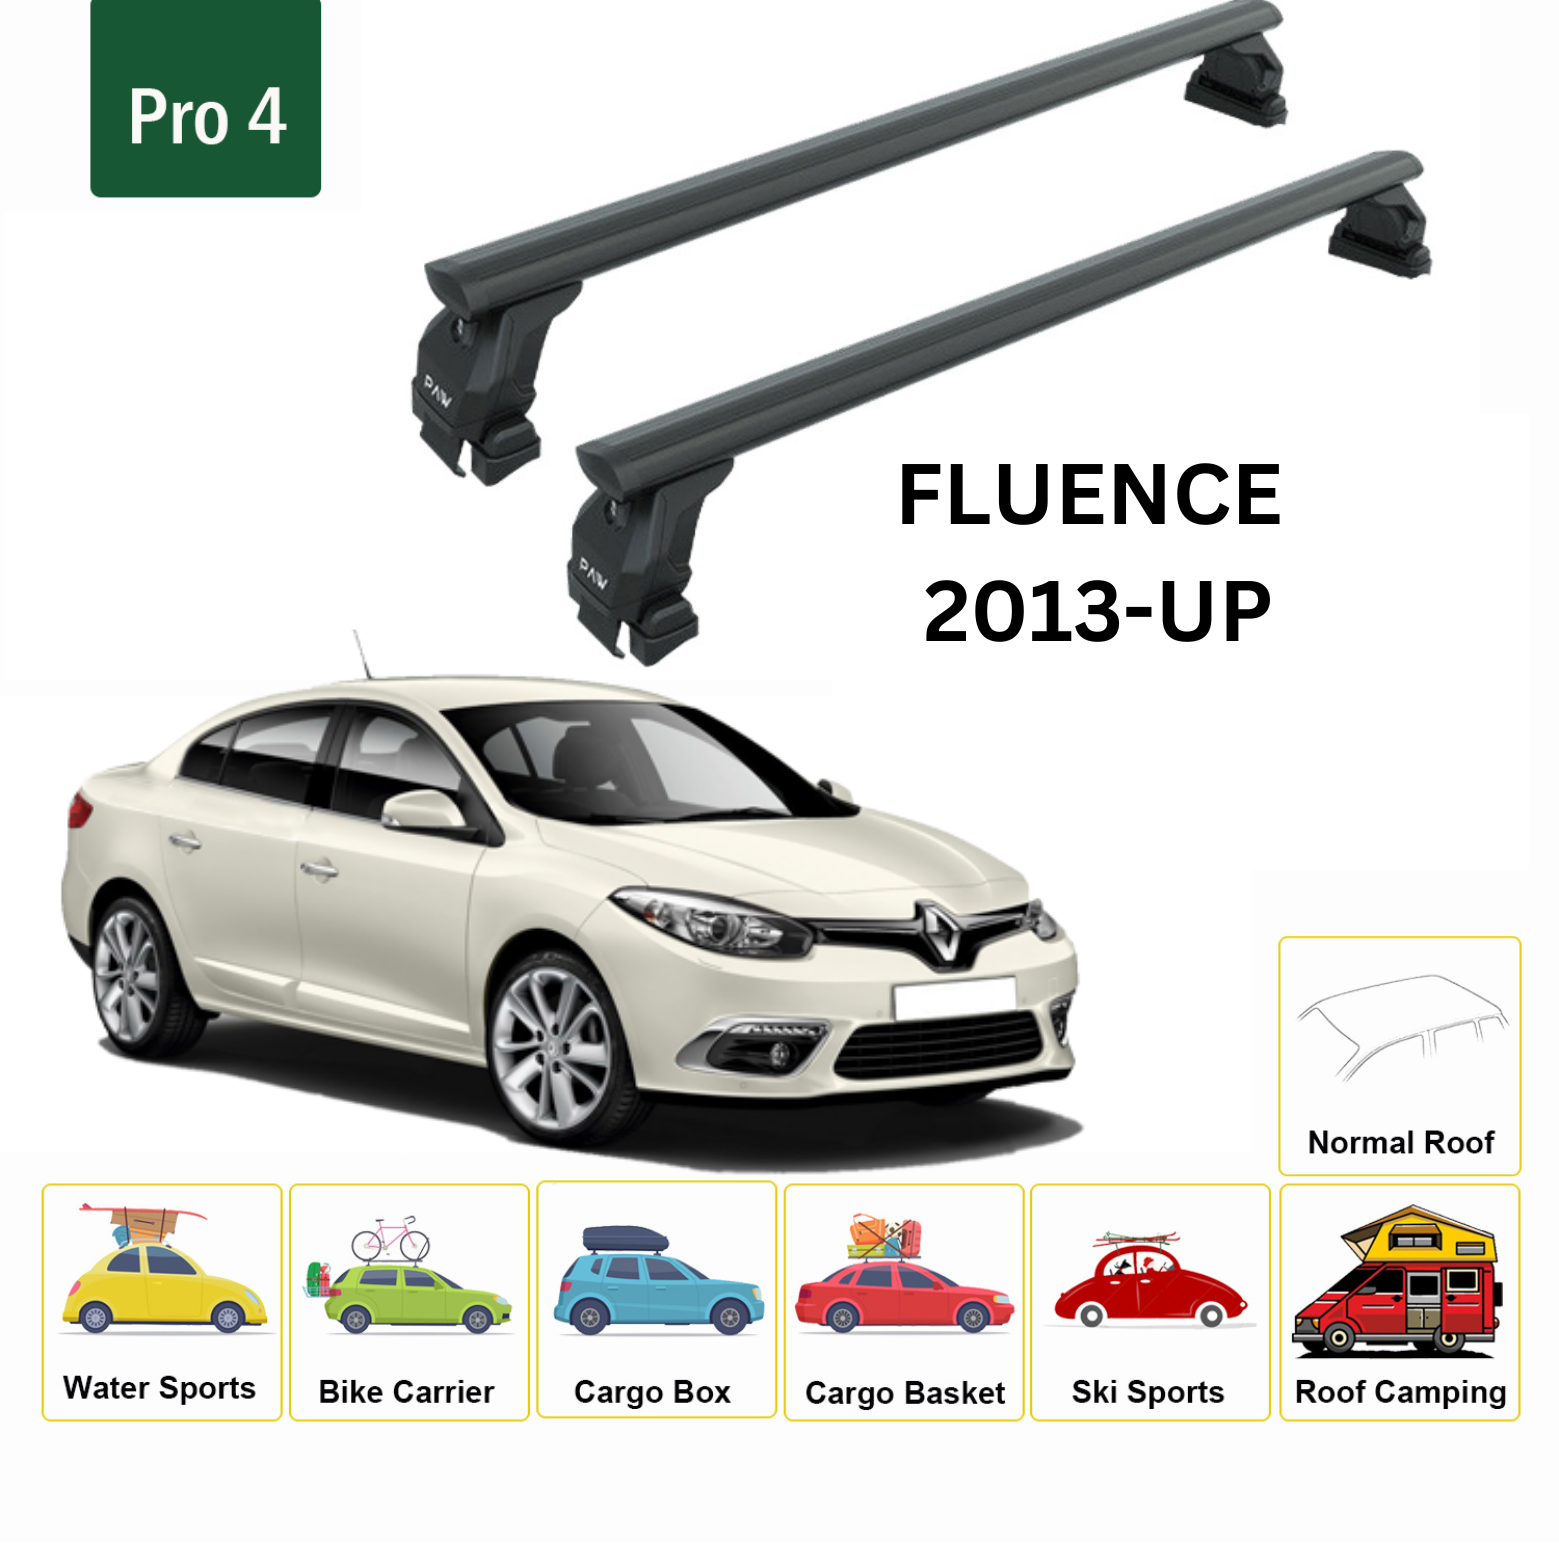 For Renault Fluence 2013-Up Roof Rack System, Aluminium Cross Bar, Metal Bracket, Normal Roof, Black - 0